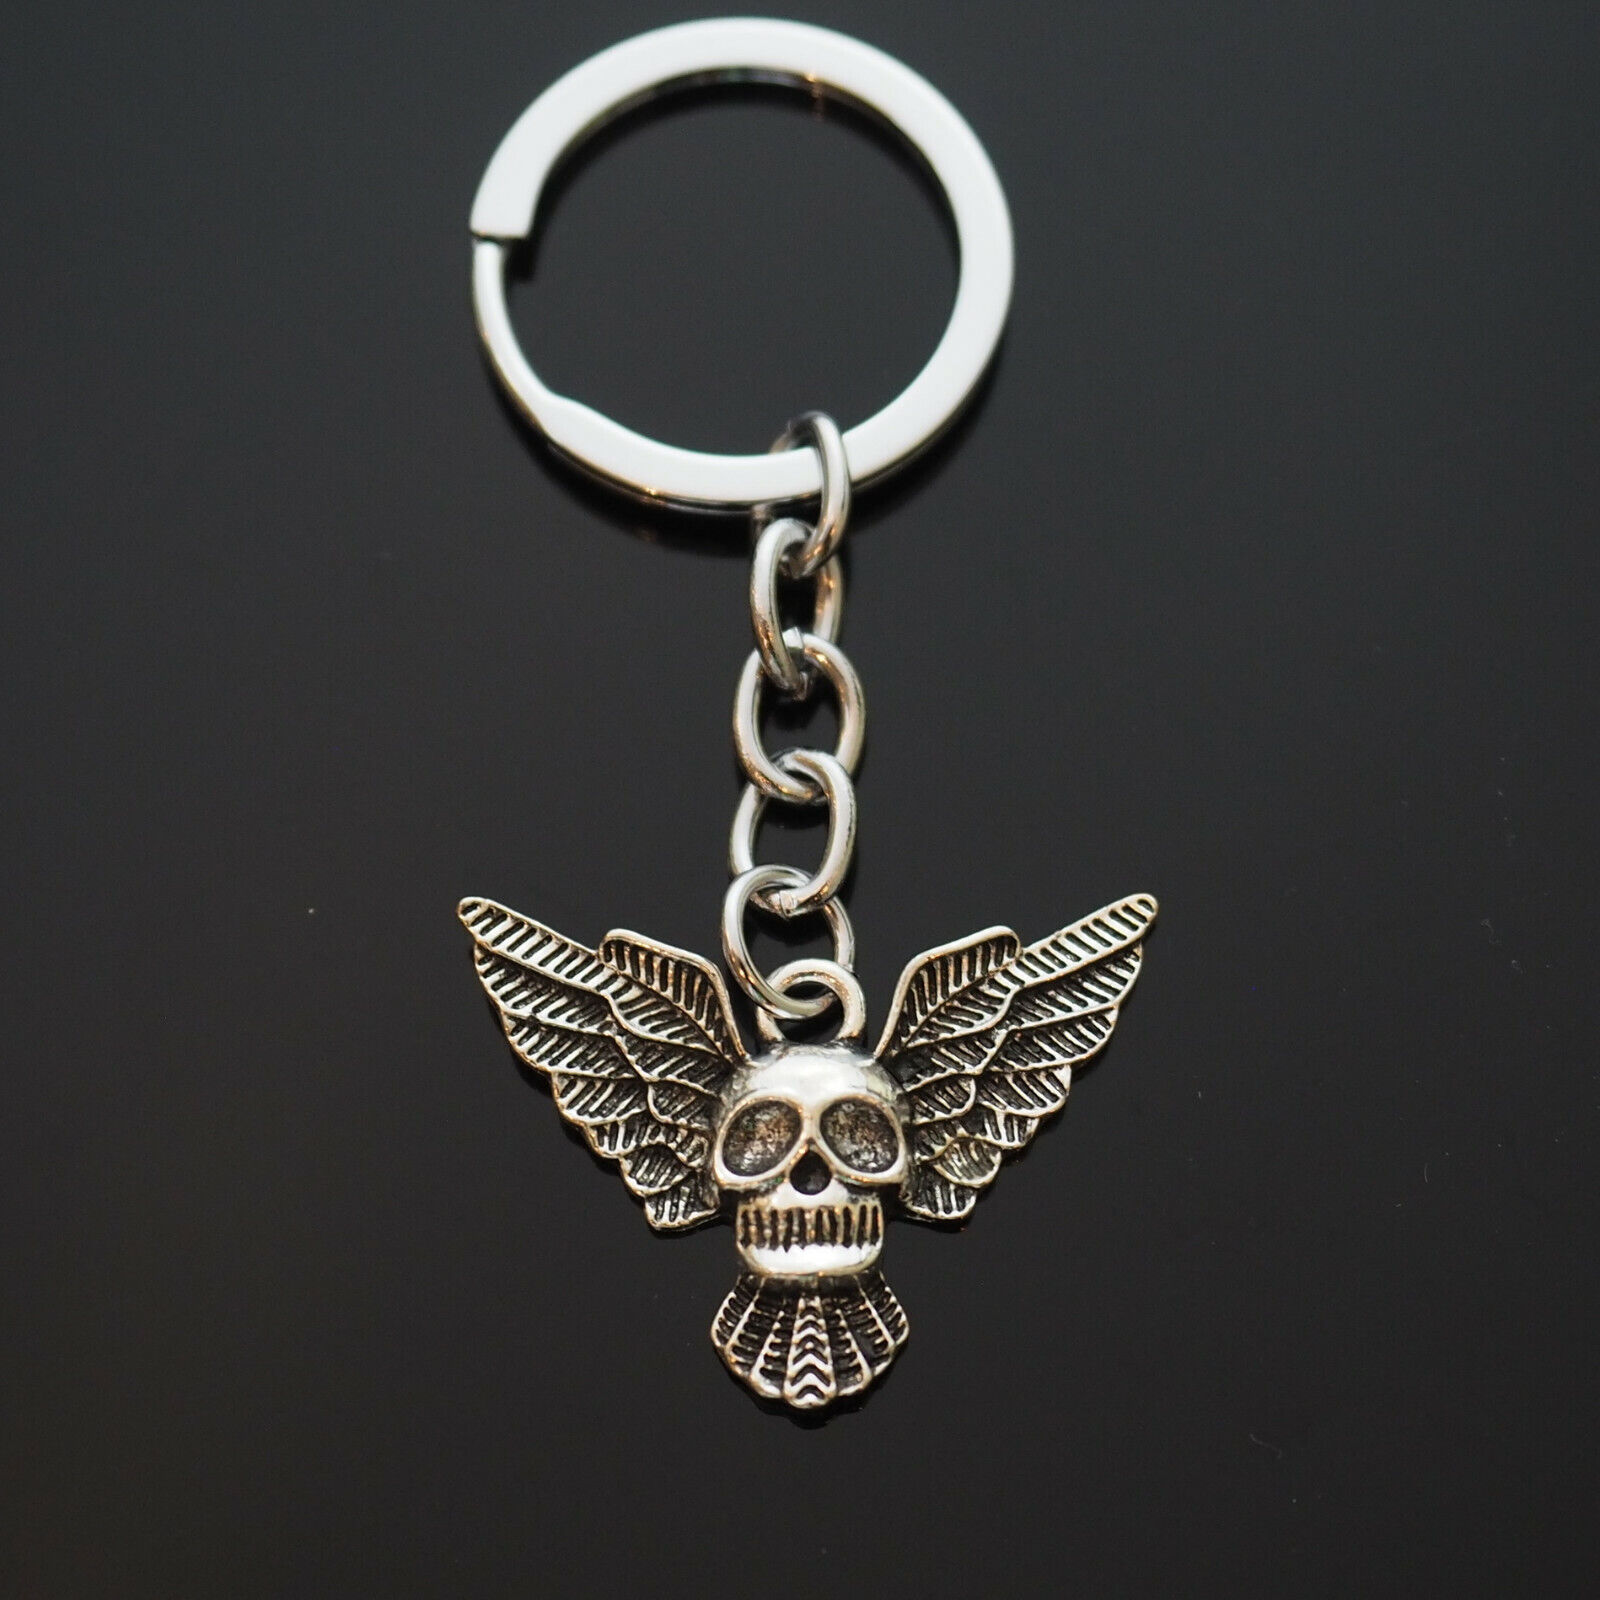 Skull and Wings Winged Bat Memento Mori Silver Charm Keychain Key Chain Gift